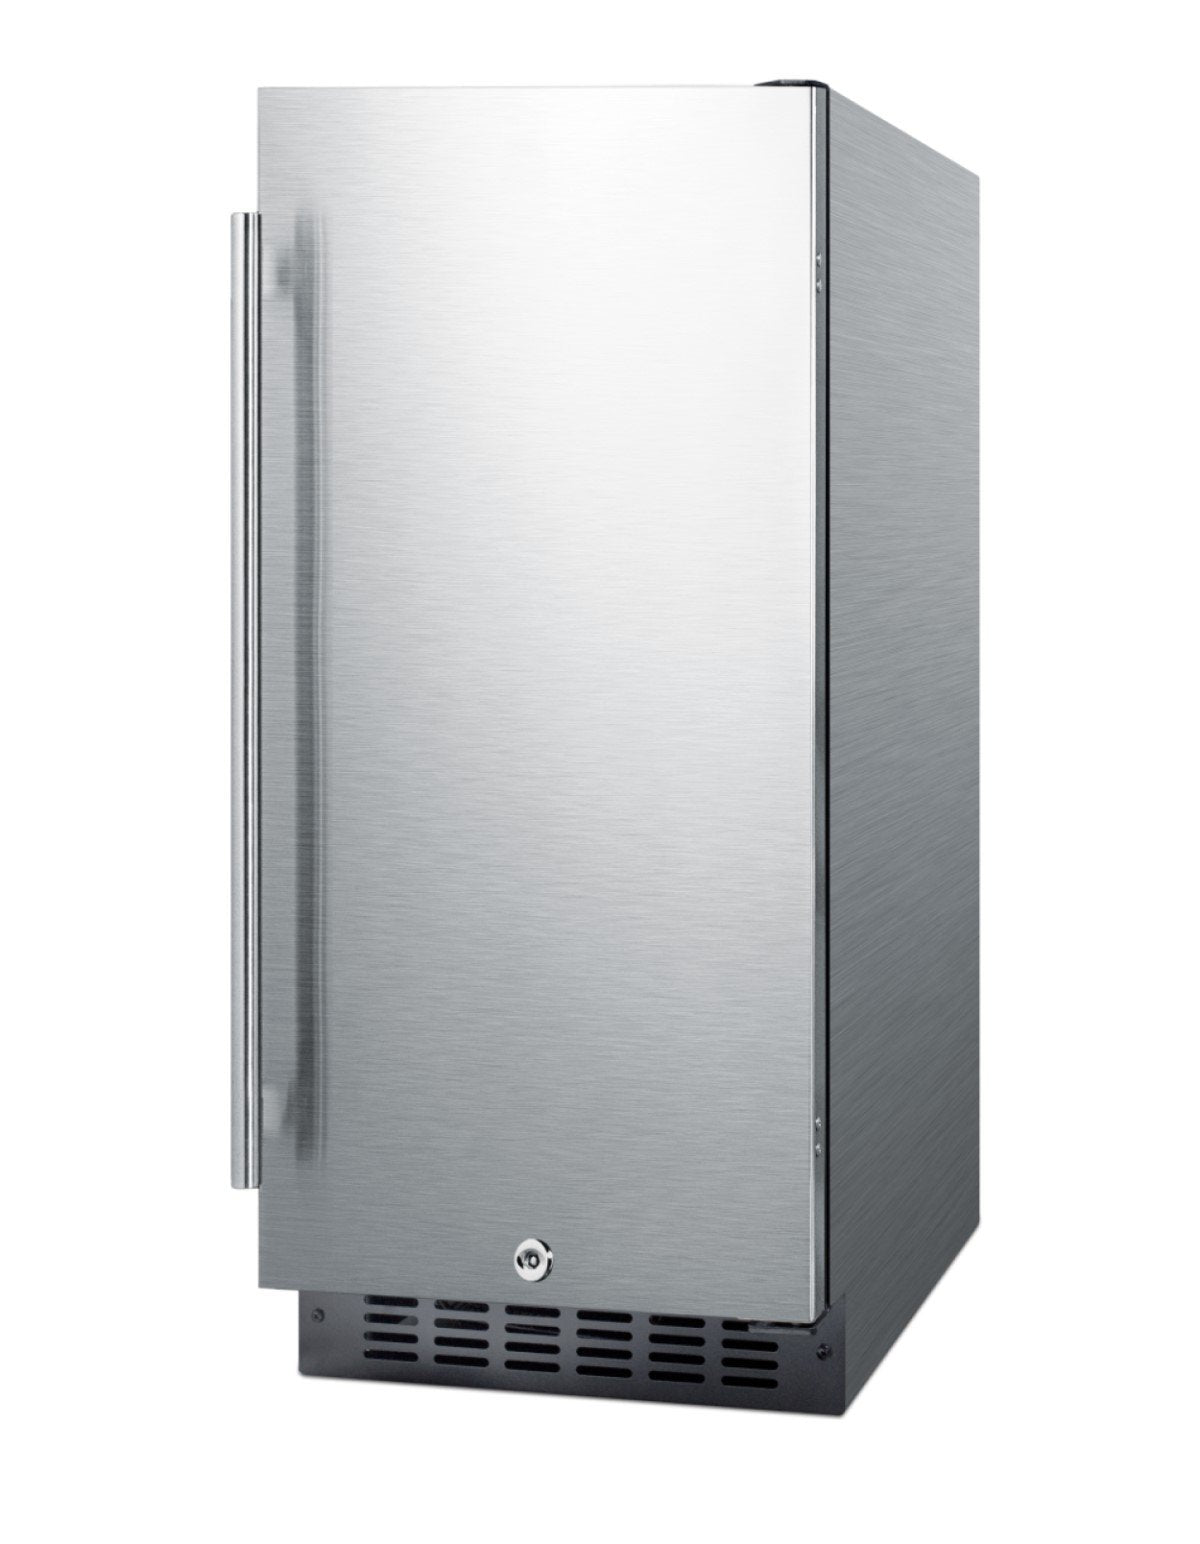 SUMMIT 15 in. Built-In All-Refrigerator (FF1532B)